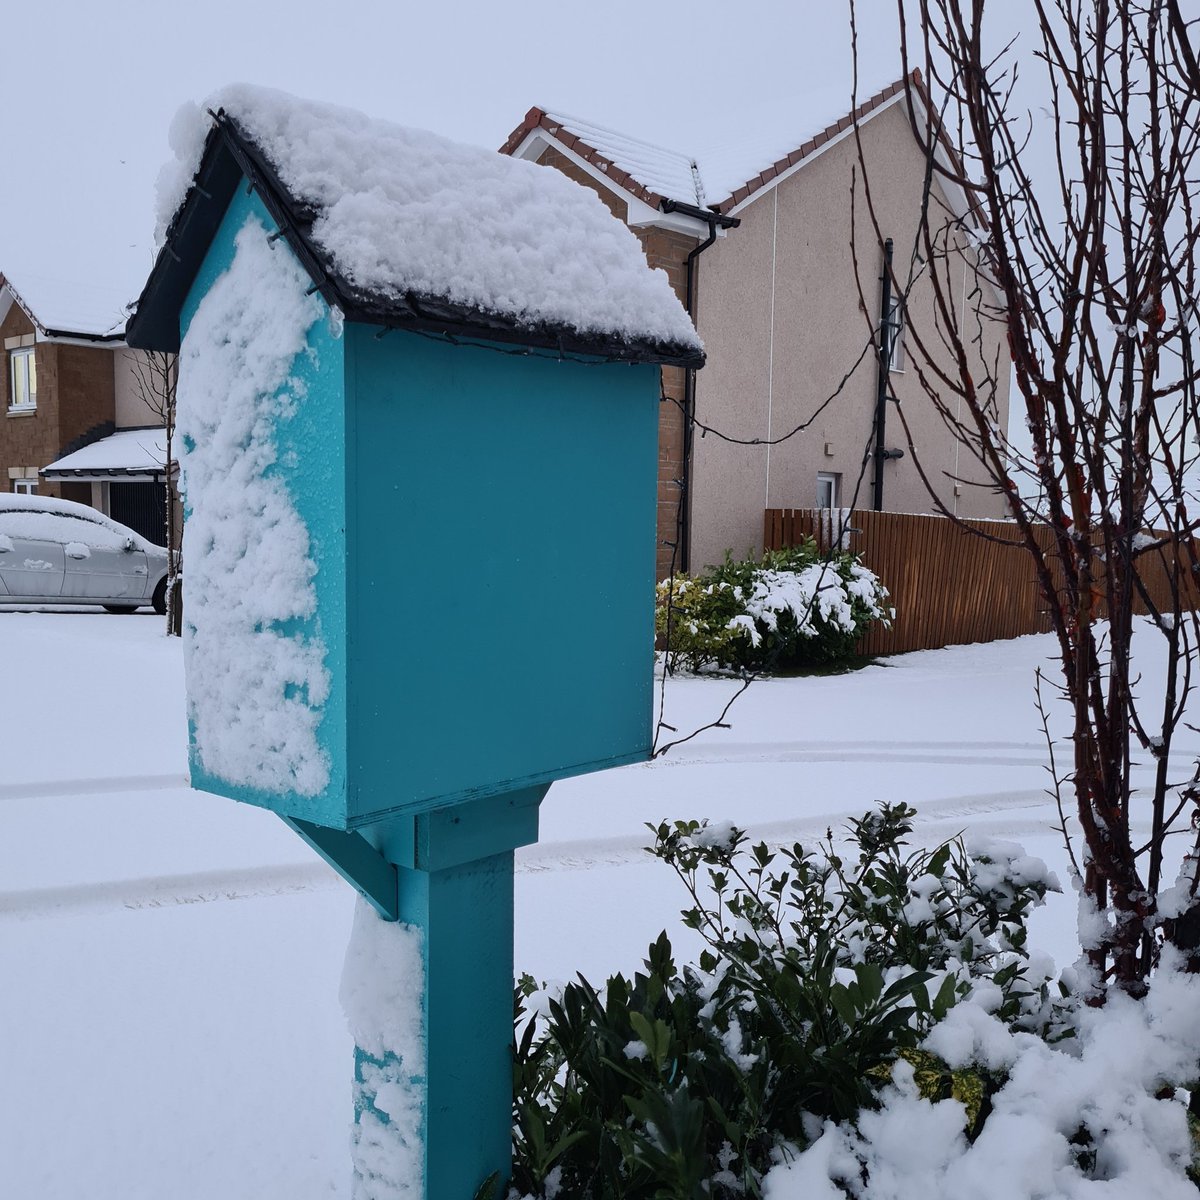 Hello from a very snowy book house in Dunfermline 💙📚🏡☃️

#LittleFreeLibrary #LittleFreeLibraryUK #LittleBookHouseFife #Dunfermline #ShineOnFife #UnitedByBooks #CommunityLibrary #IBelieveInBookFairies #PoweredByBookFairies #ShareTheLoveOfReading #VisitFife #DiscoverFife